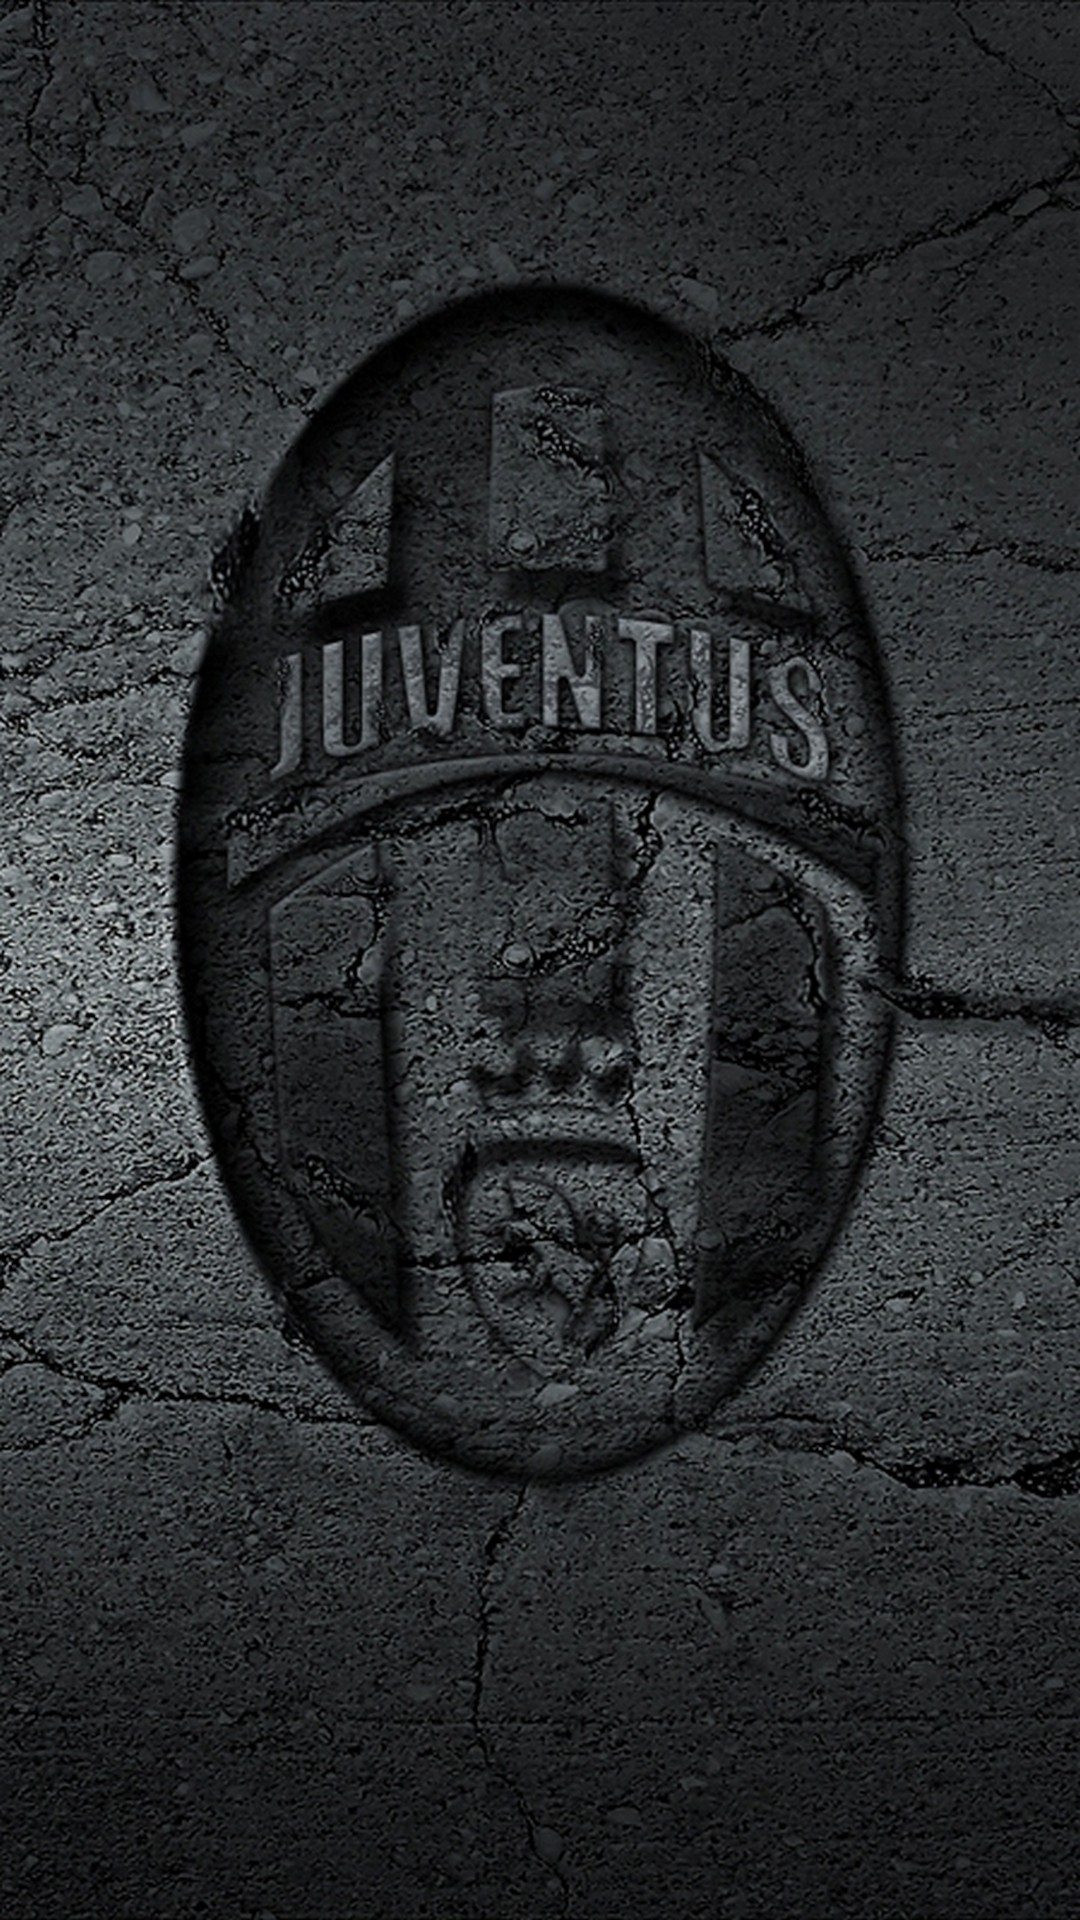 Dark Juventus iPhone Wallpaper resolution 1080x1920